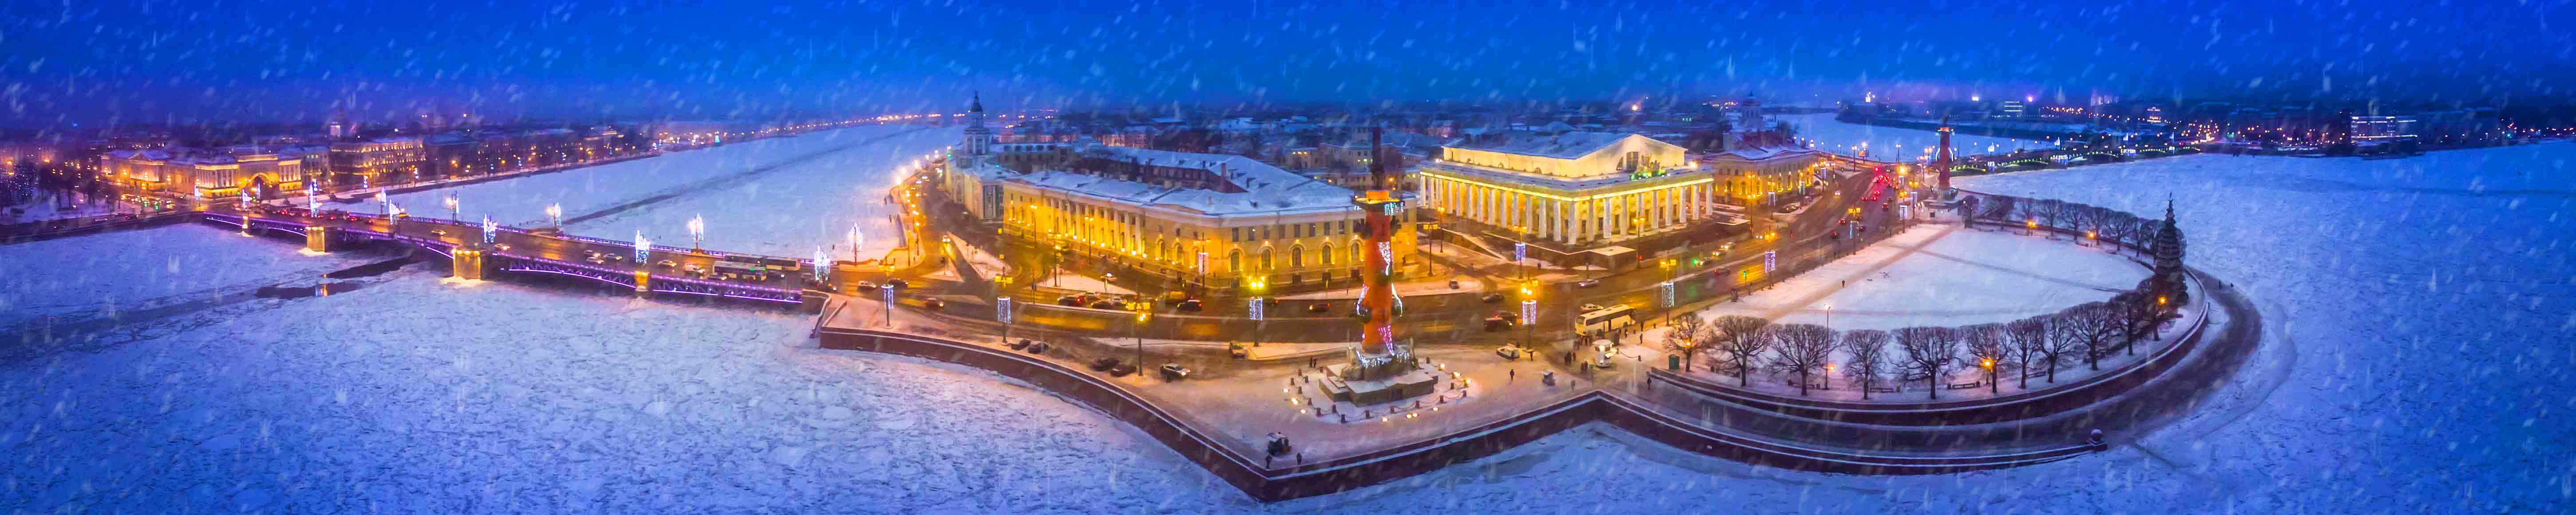 Petersburg in the winter. Snowfall in the center of St. Petersbu